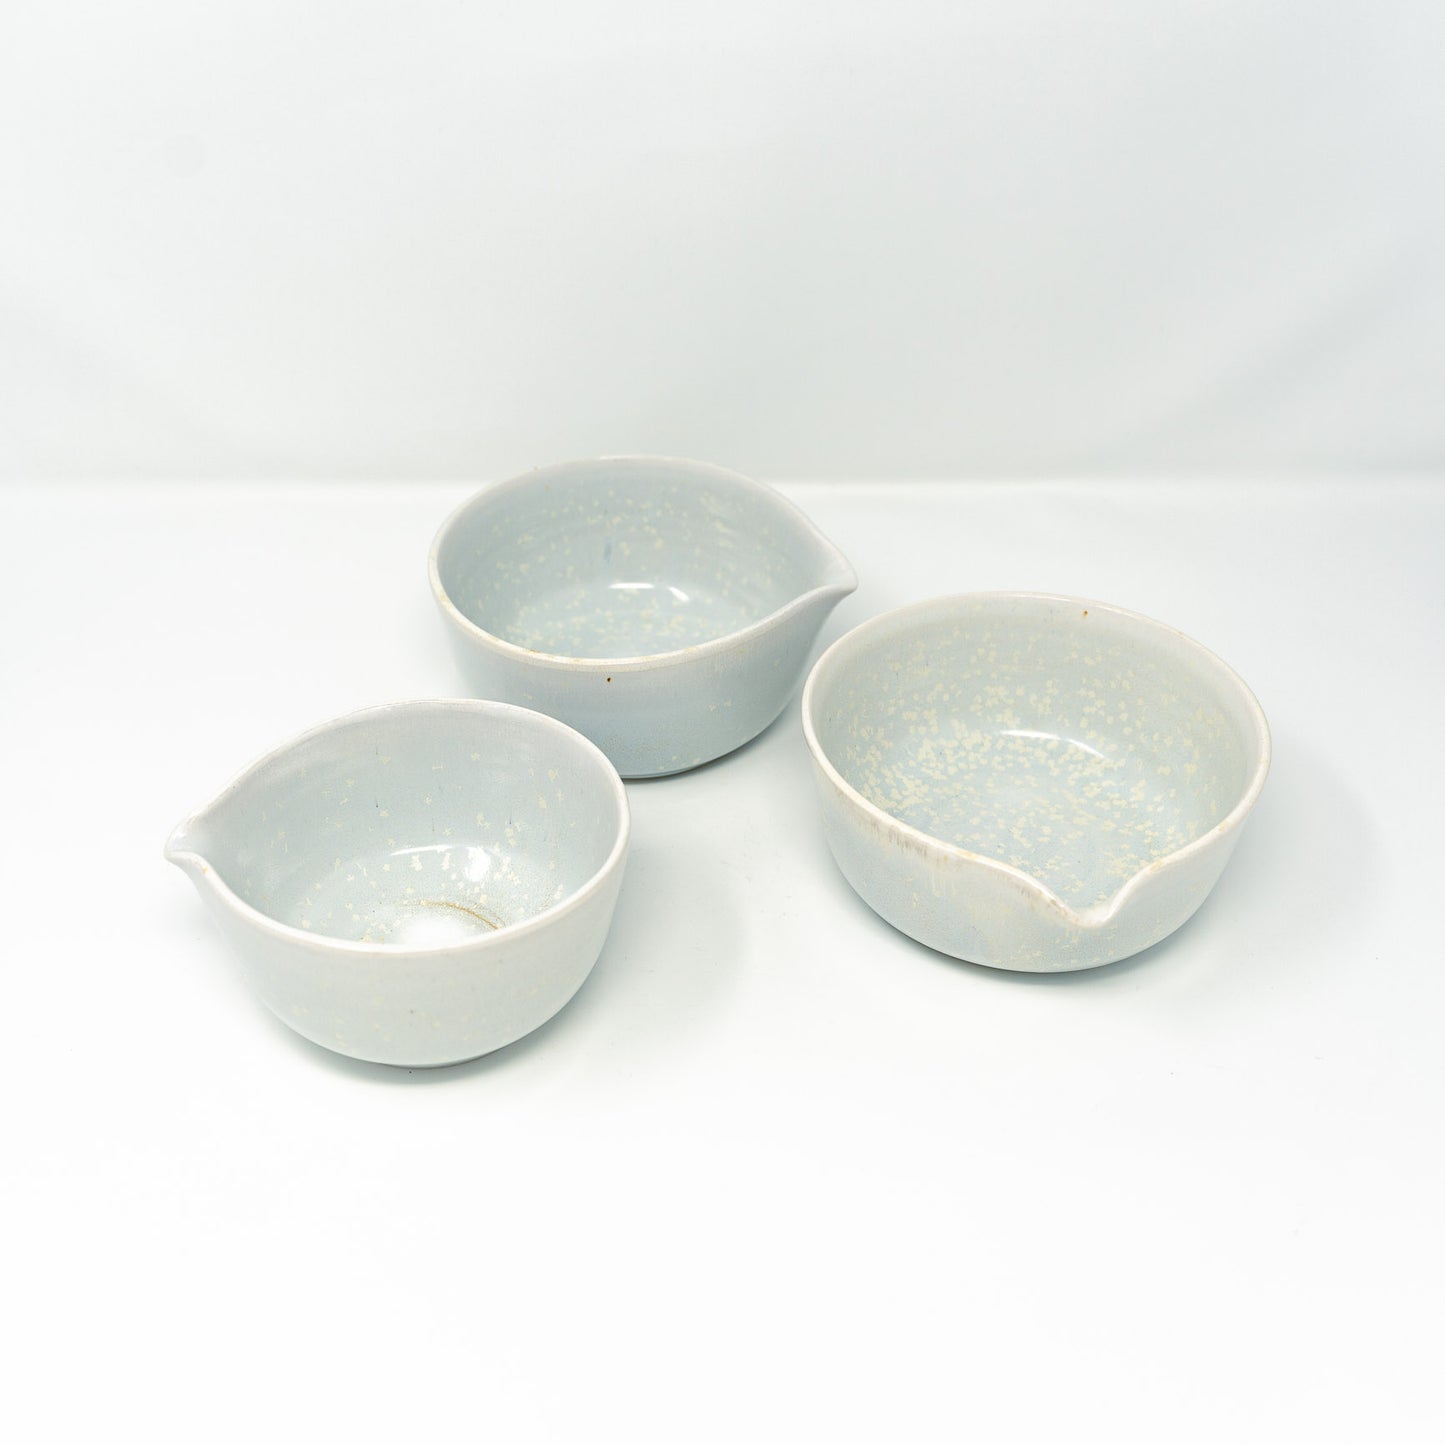 Porcelain matcha bowl